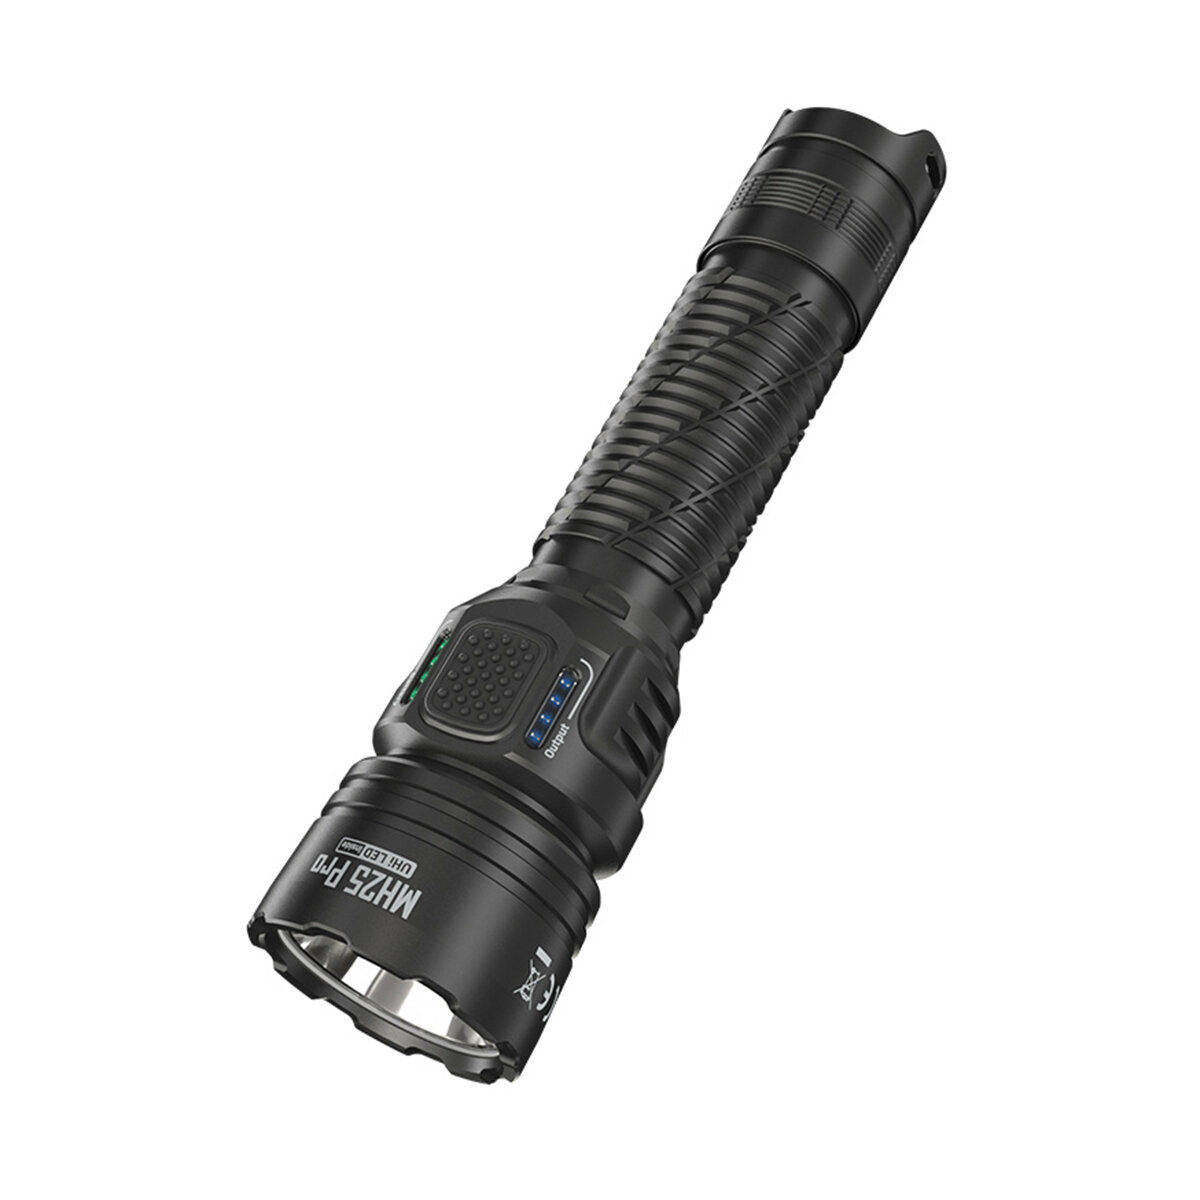 Nitecore MH25 Pro Long Throw Flashlight 3300 Lumen High Lumen 770 Yard Long Range USB-C Rechargeable Compact Duty Light